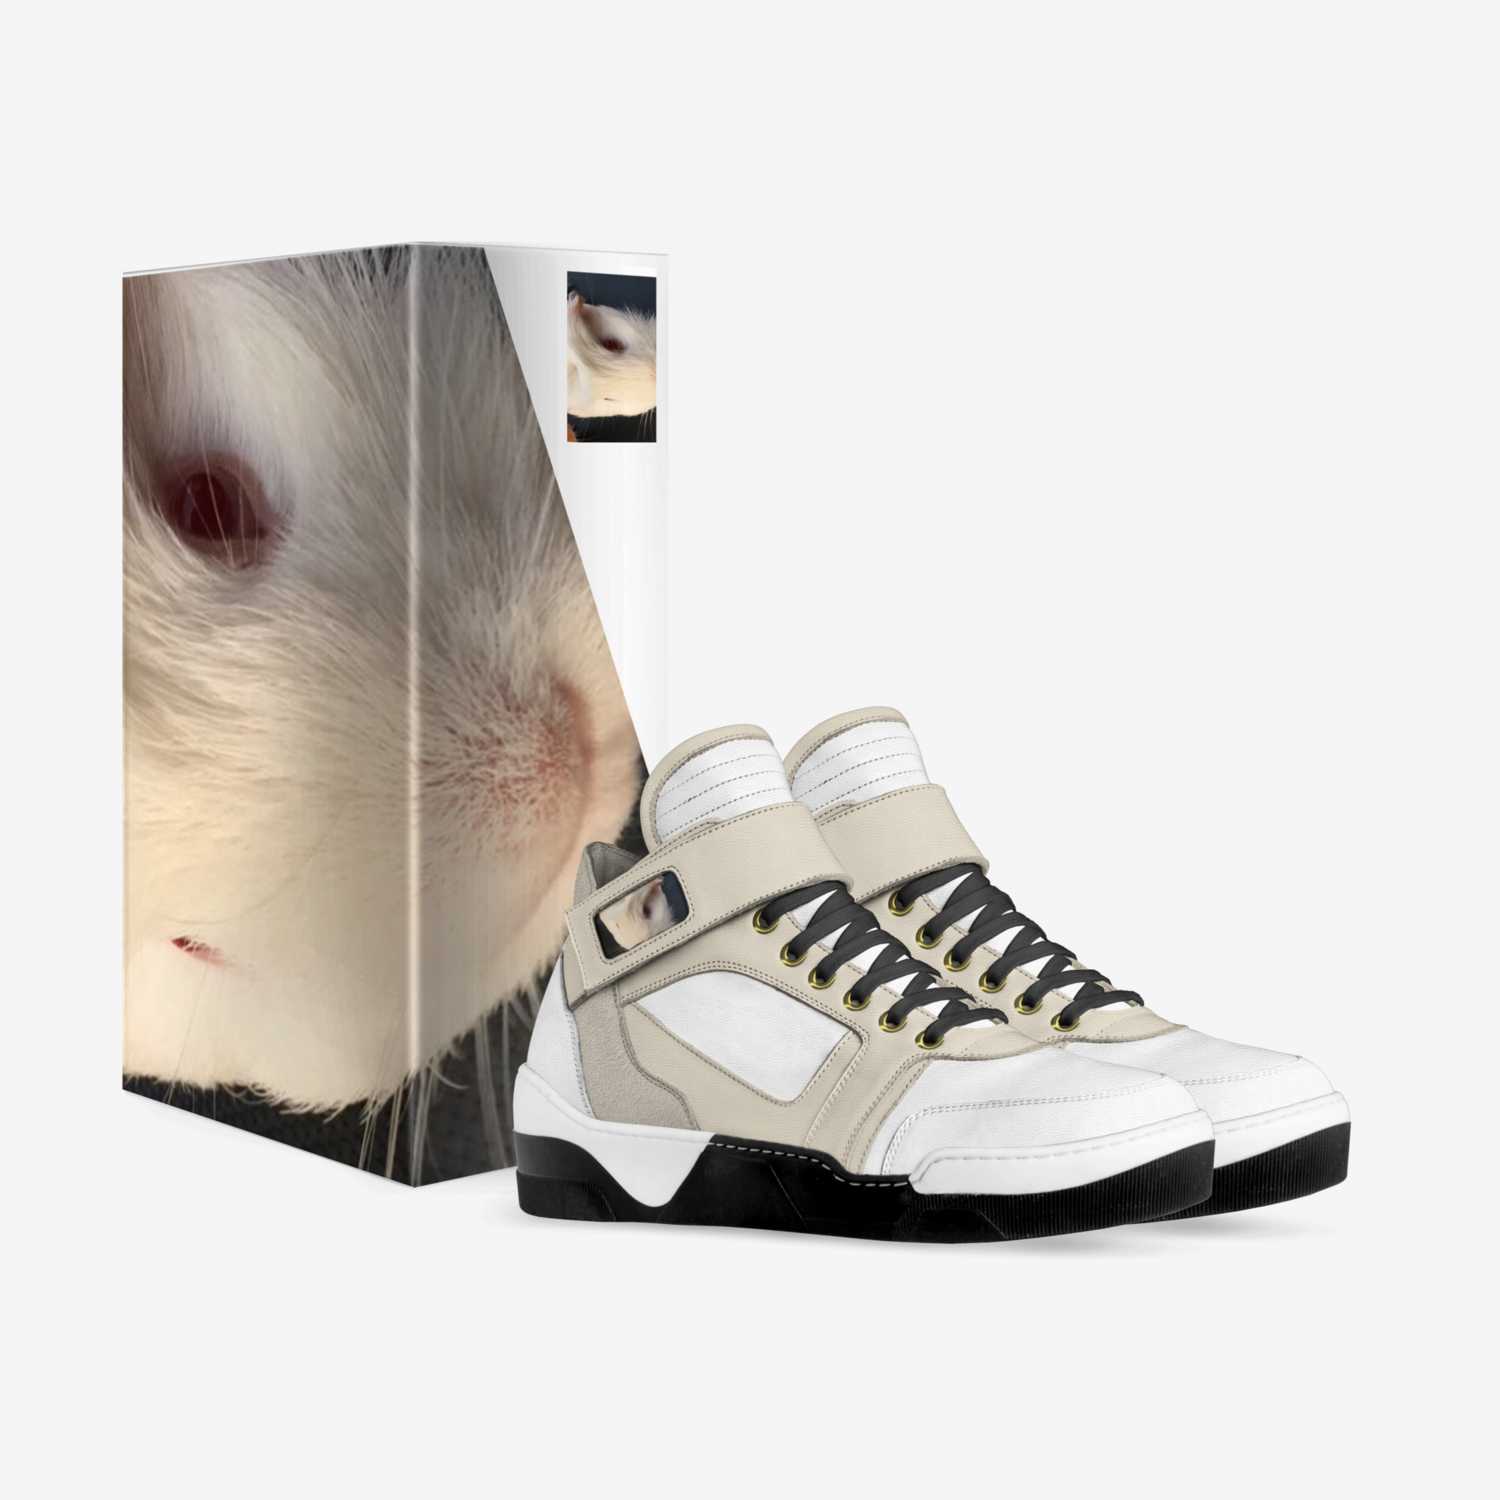 Let me die boi custom made in Italy shoes by Biggie Steve | Box view